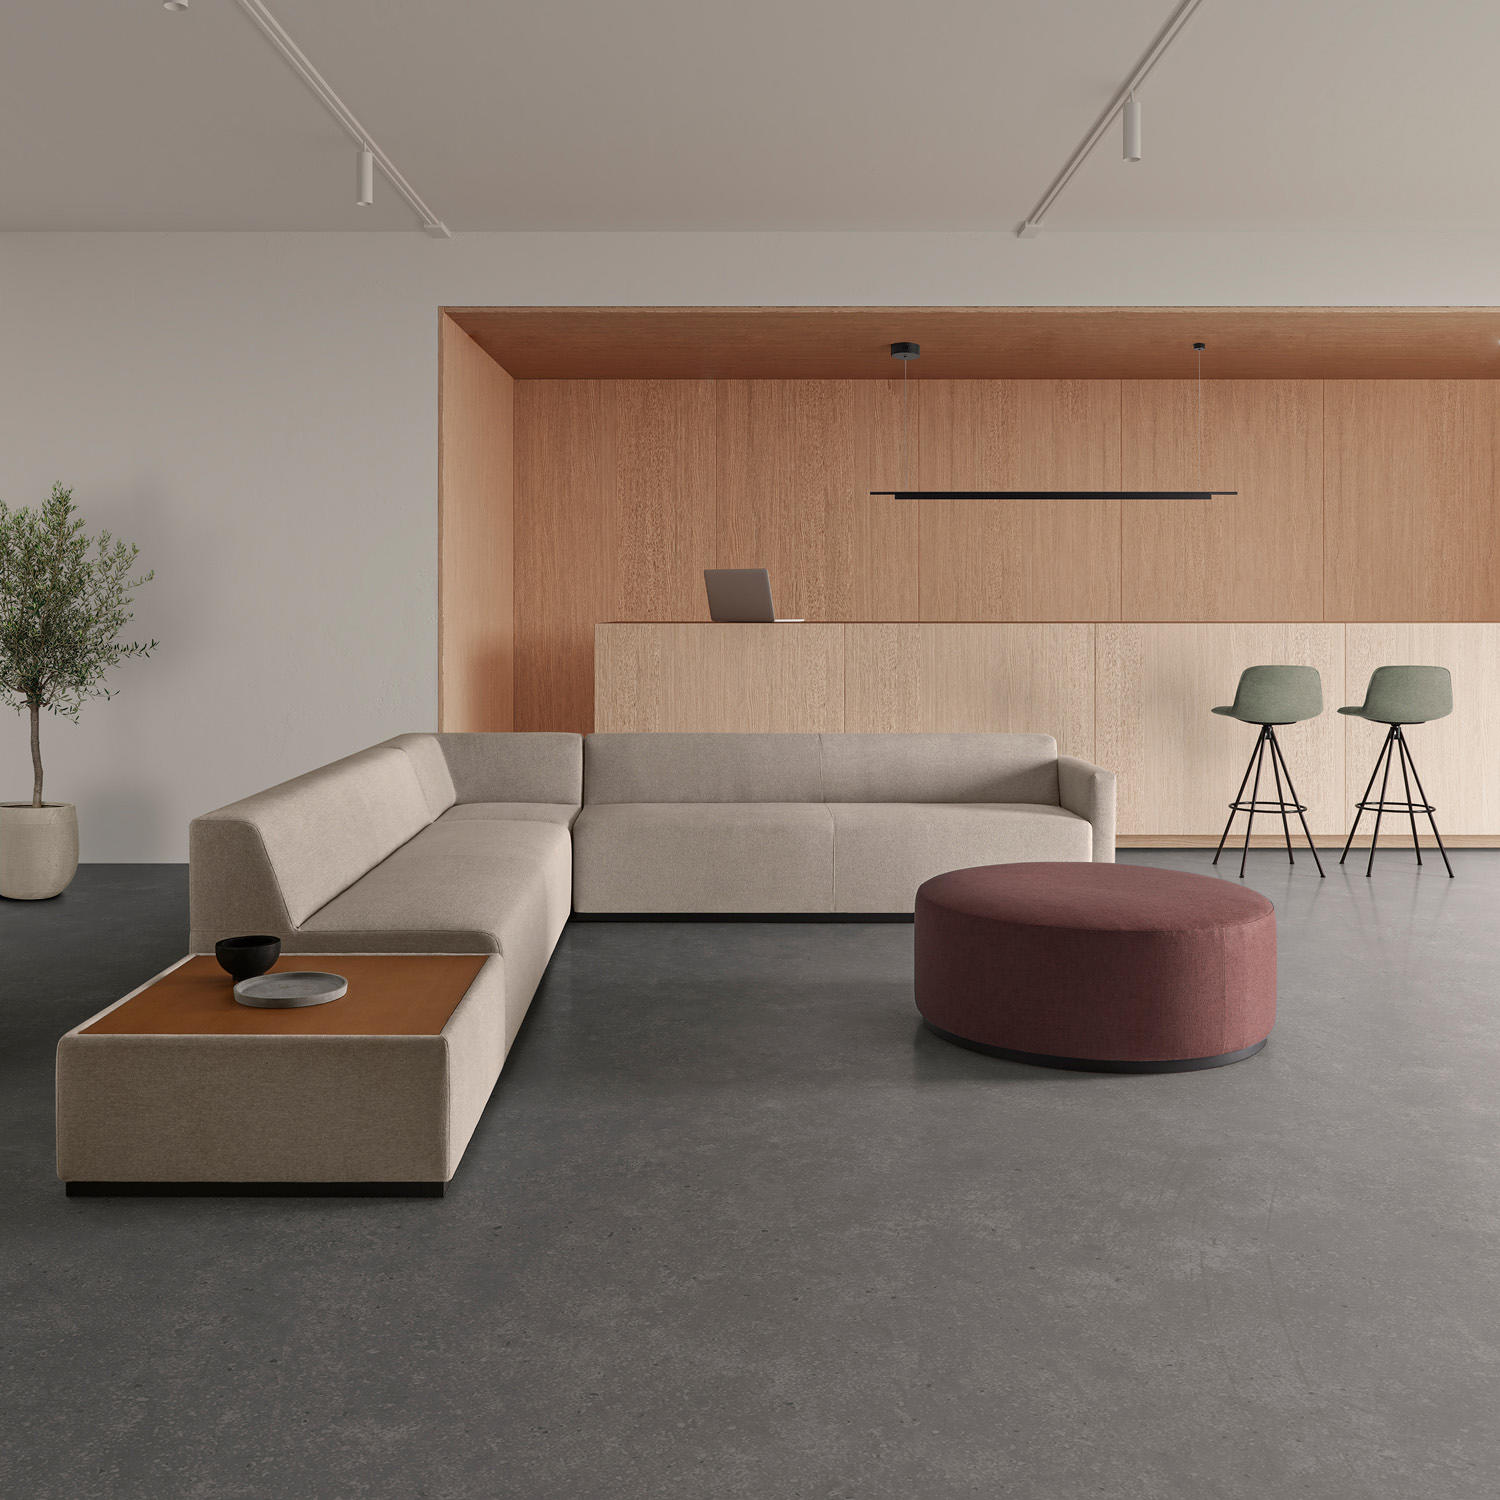 PAU Modular Sofas by Inclass